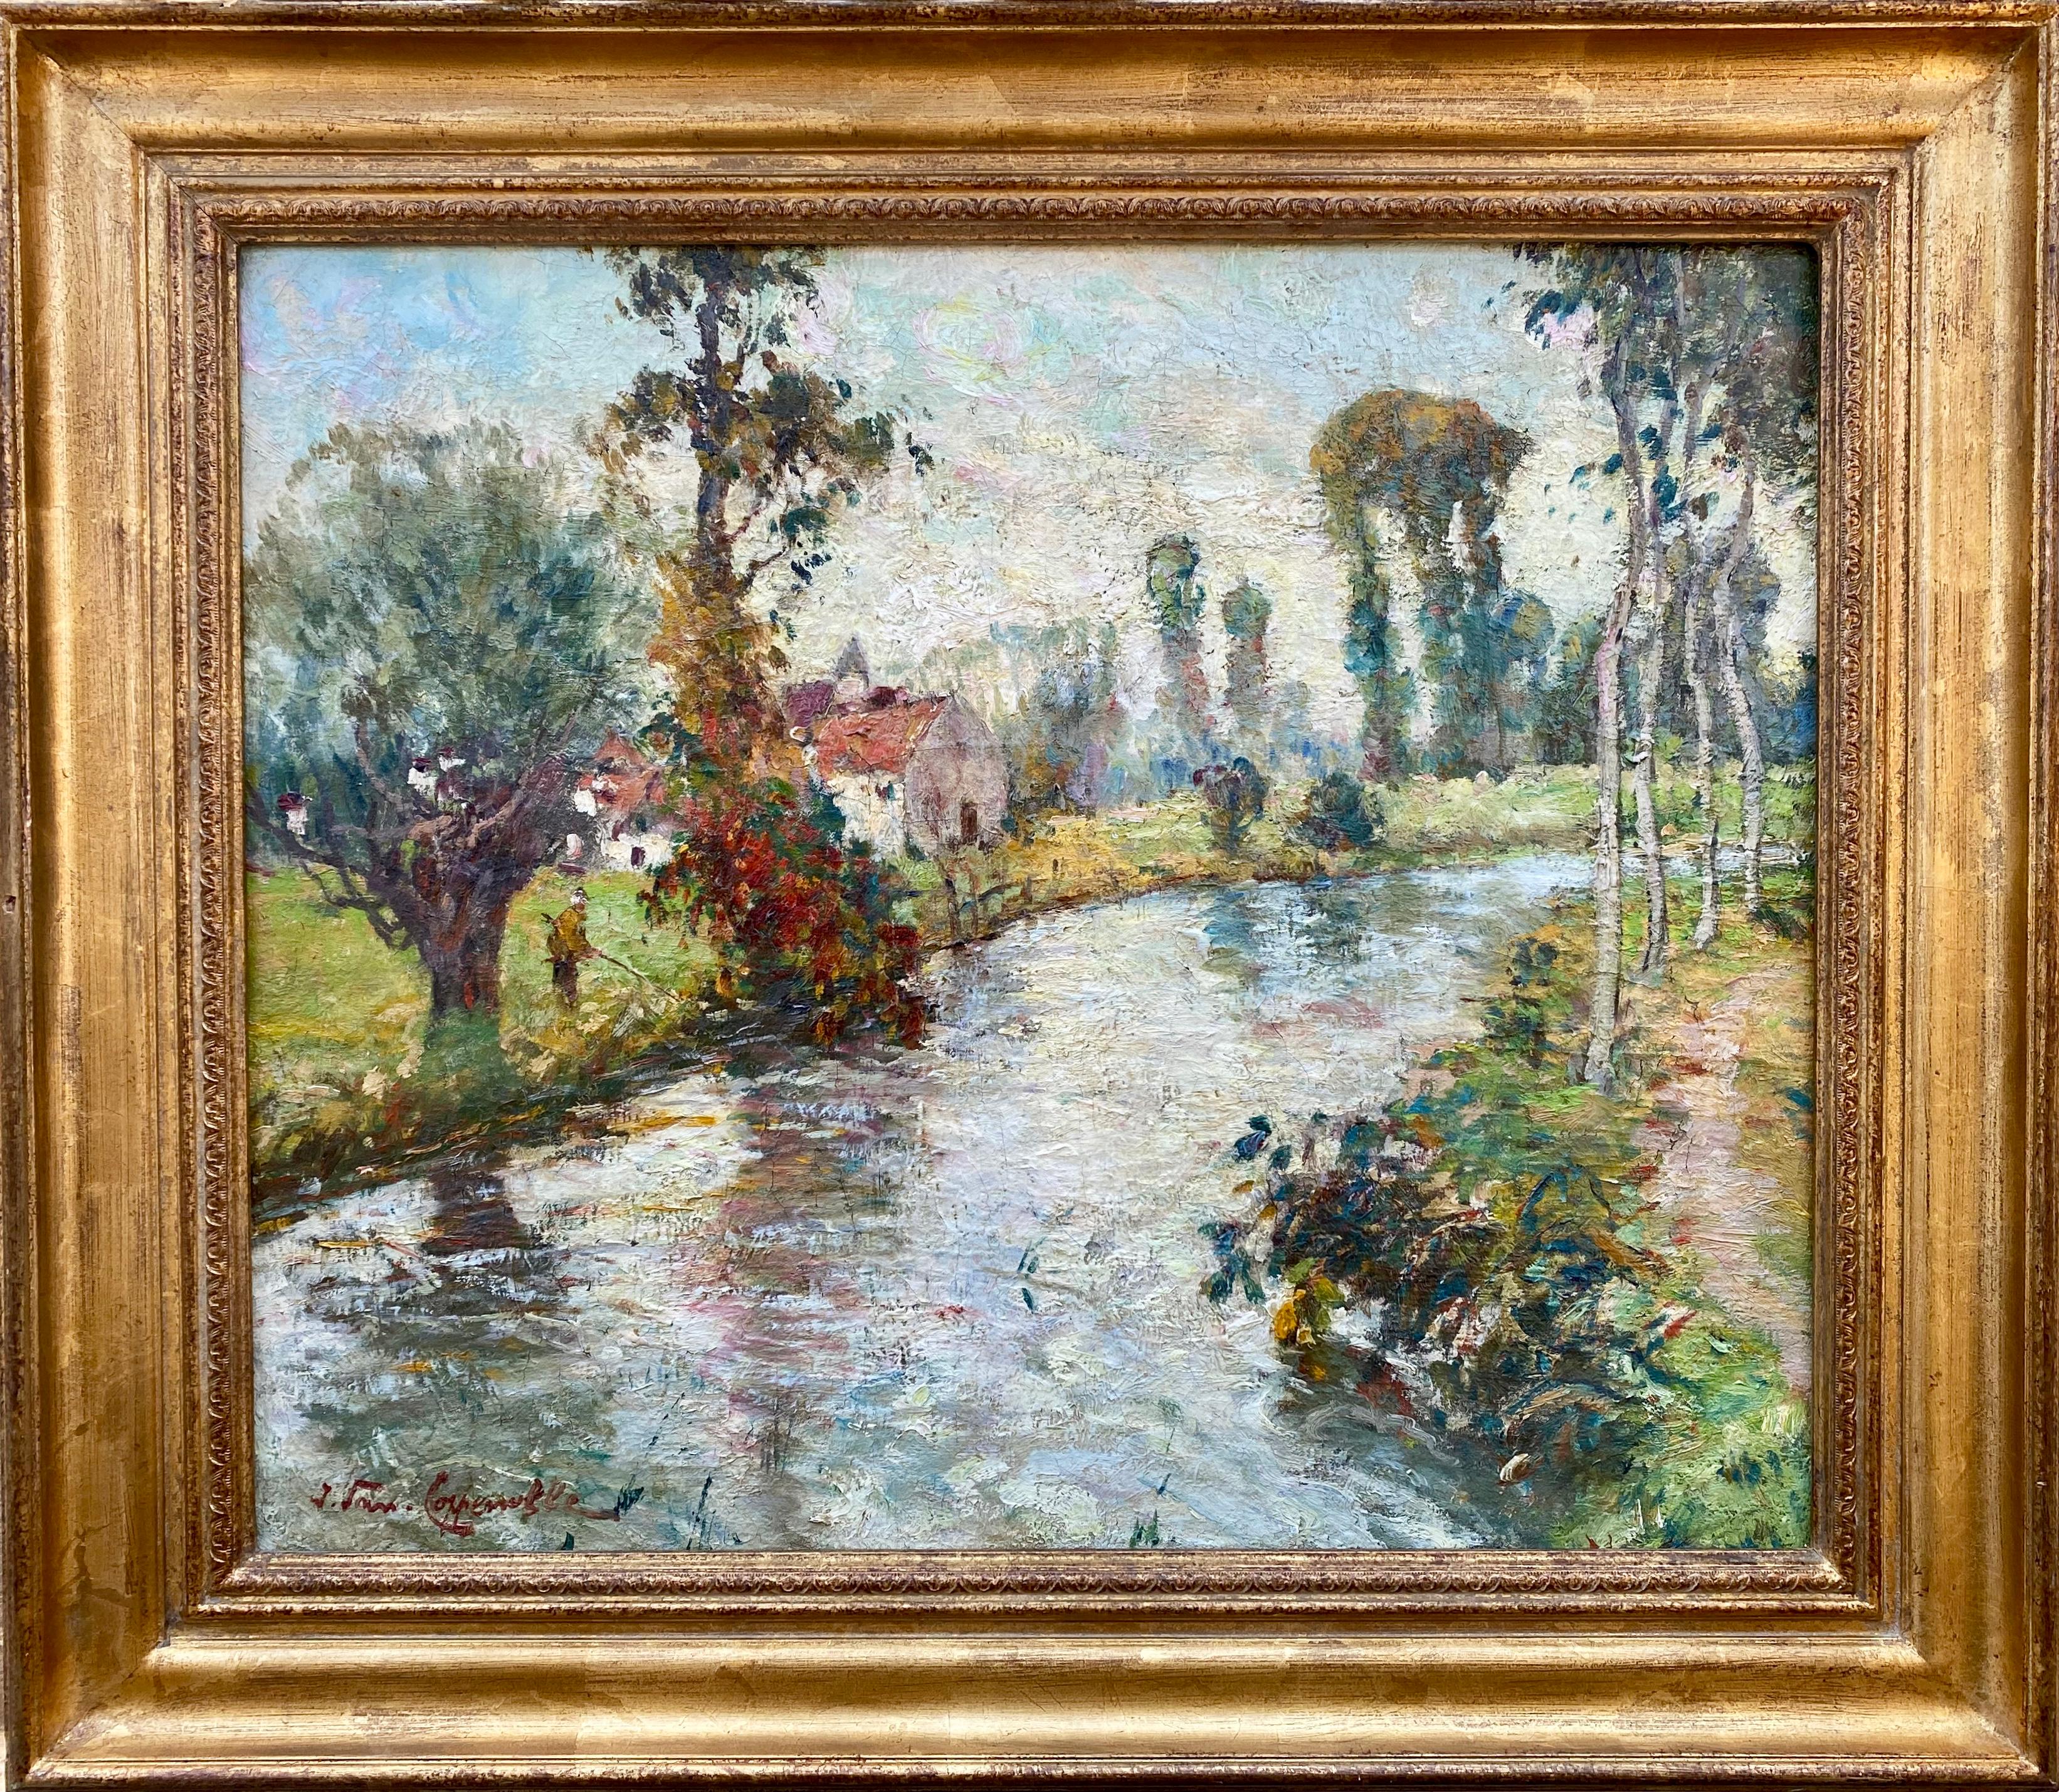 Jacques van Coppenolle Figurative Painting - Barbizon Fontainebleau region Impressionist French summer landscape with figure